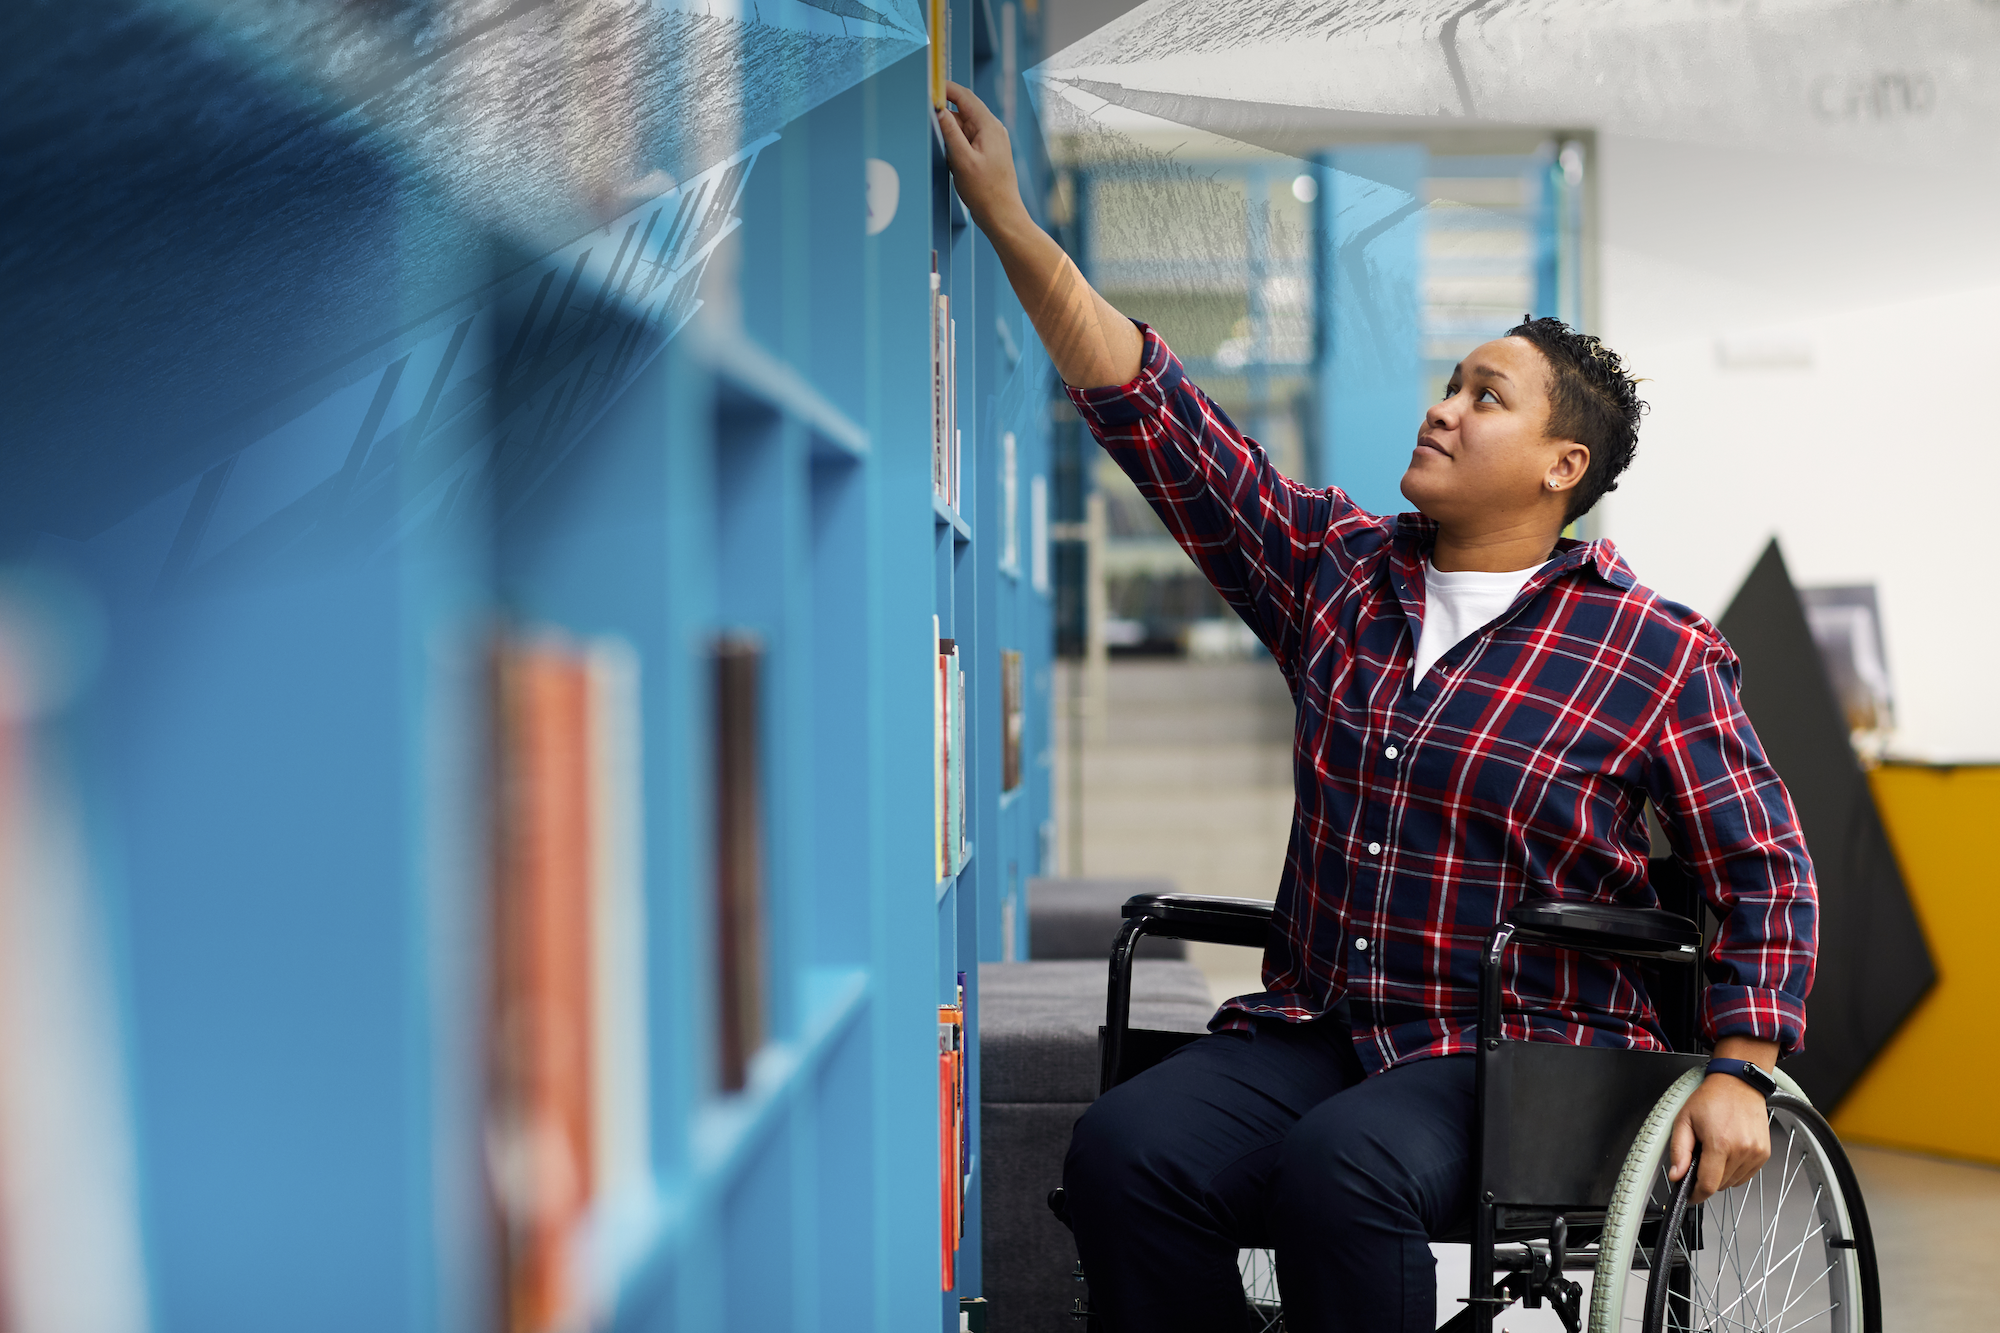 a person in a wheelchair touching a book shelf